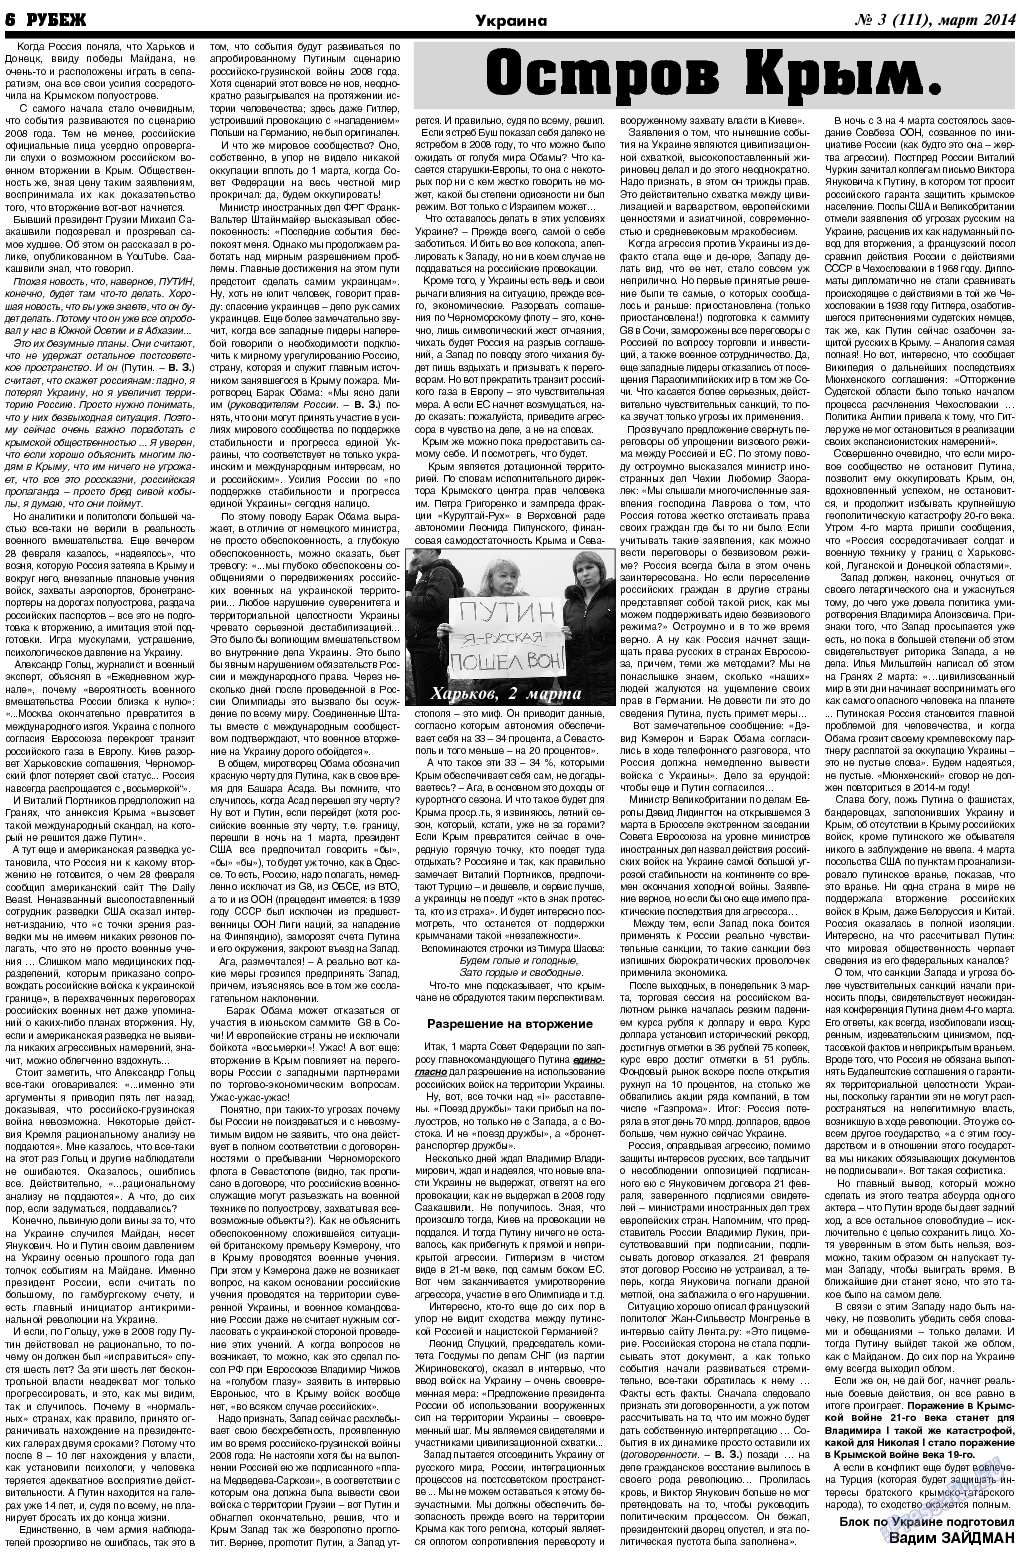 Рубеж, газета. 2014 №3 стр.6